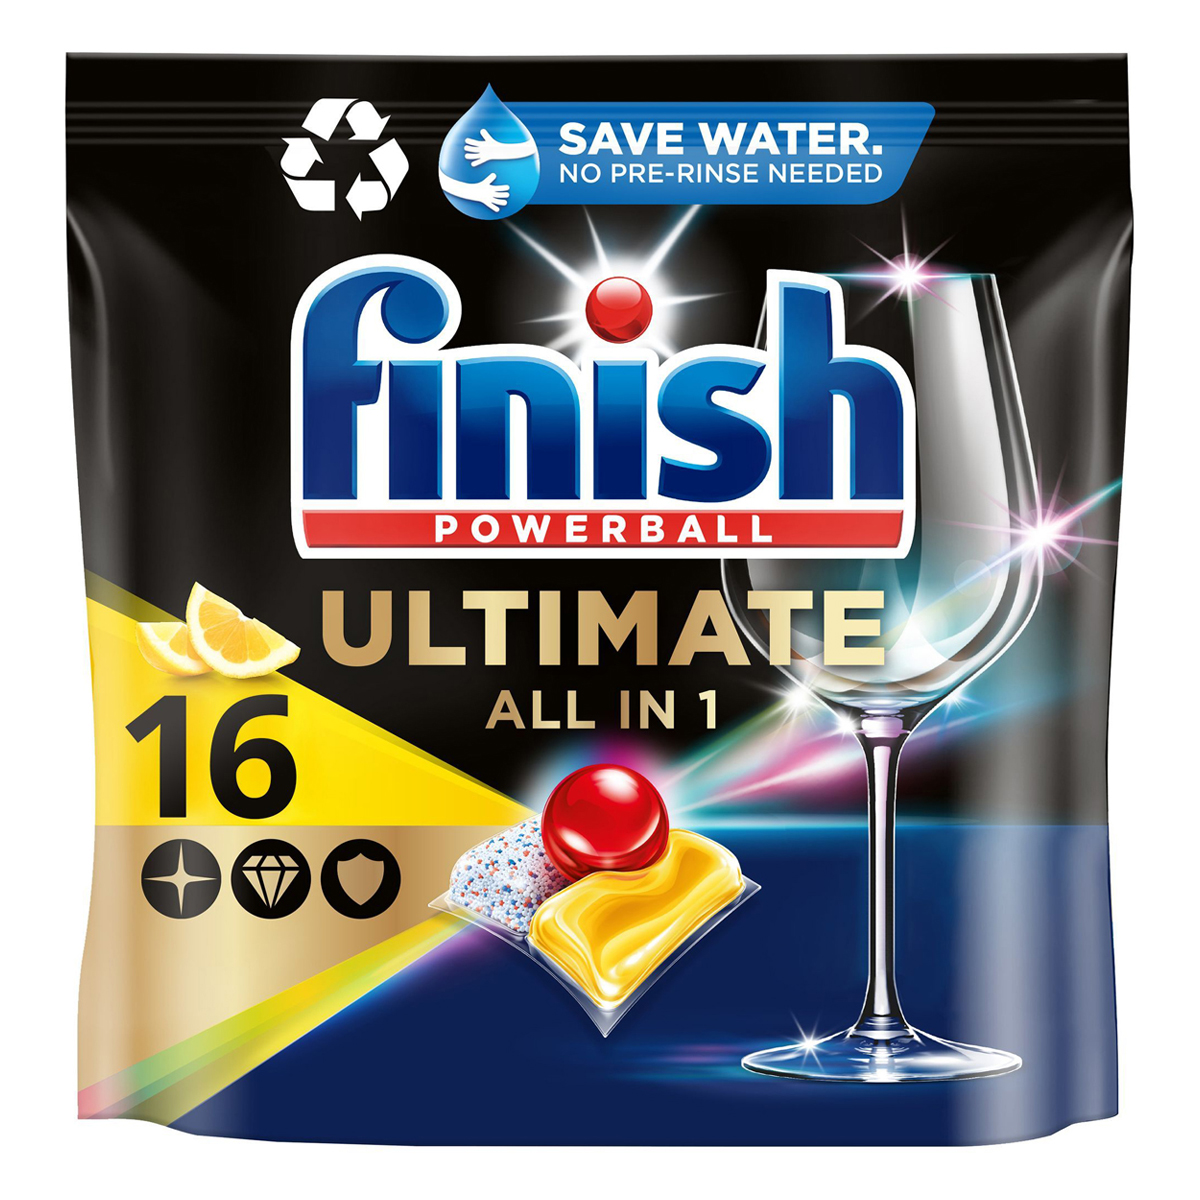 Finish Ultimate Plus Caps Πλυντηρίου Πιάτων Lemon 14 Τεμάχια